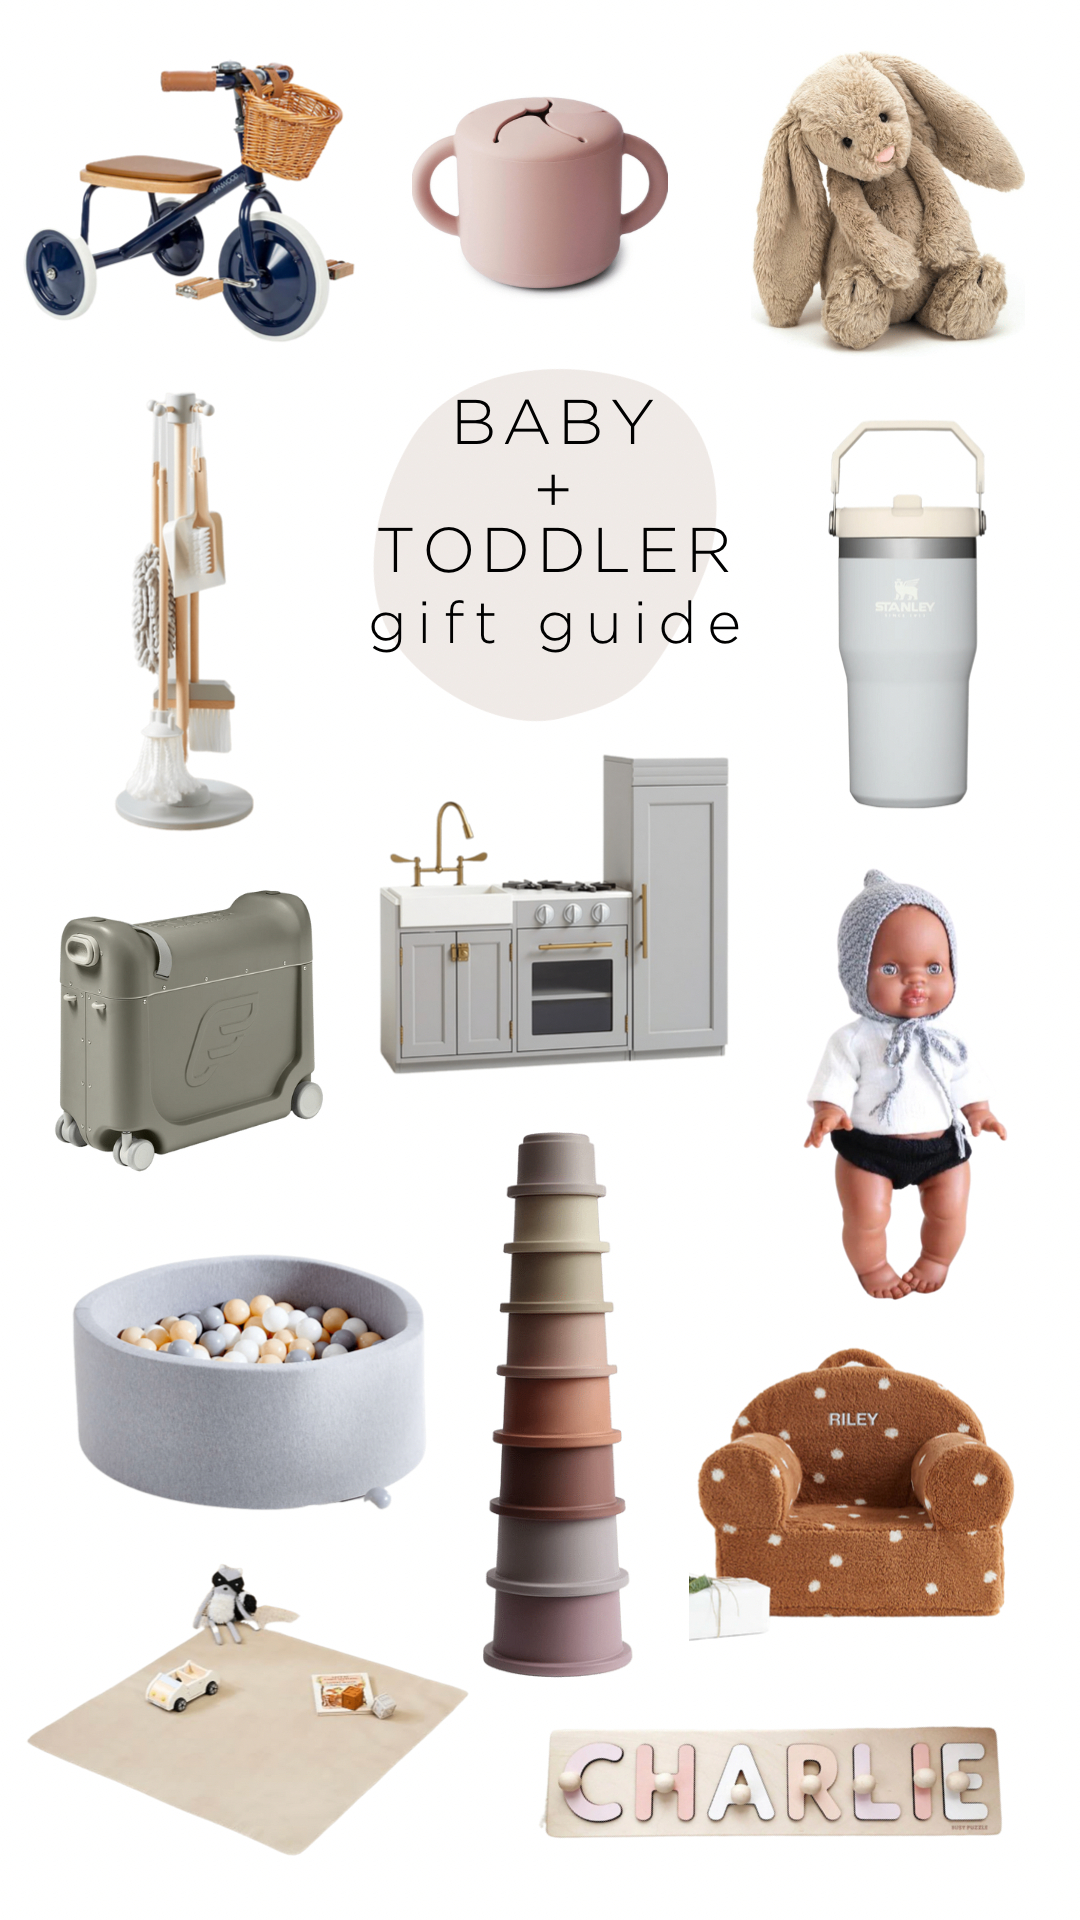 Toddler Gift Ideas